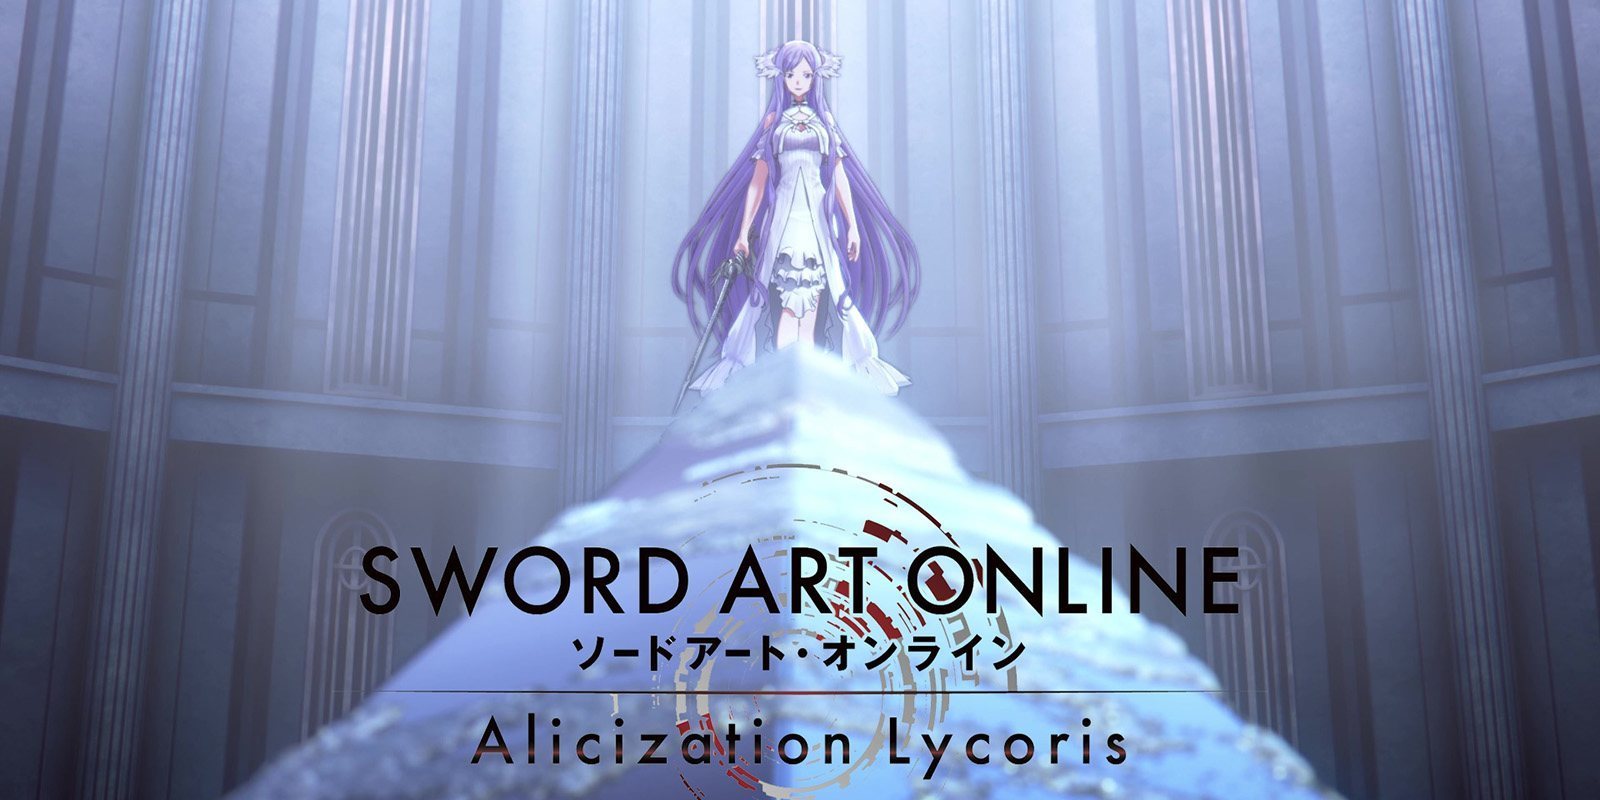 Bandai Namco mostrará 'Sword Art Online: Alicization Lycoris' el próximo 18 de agosto